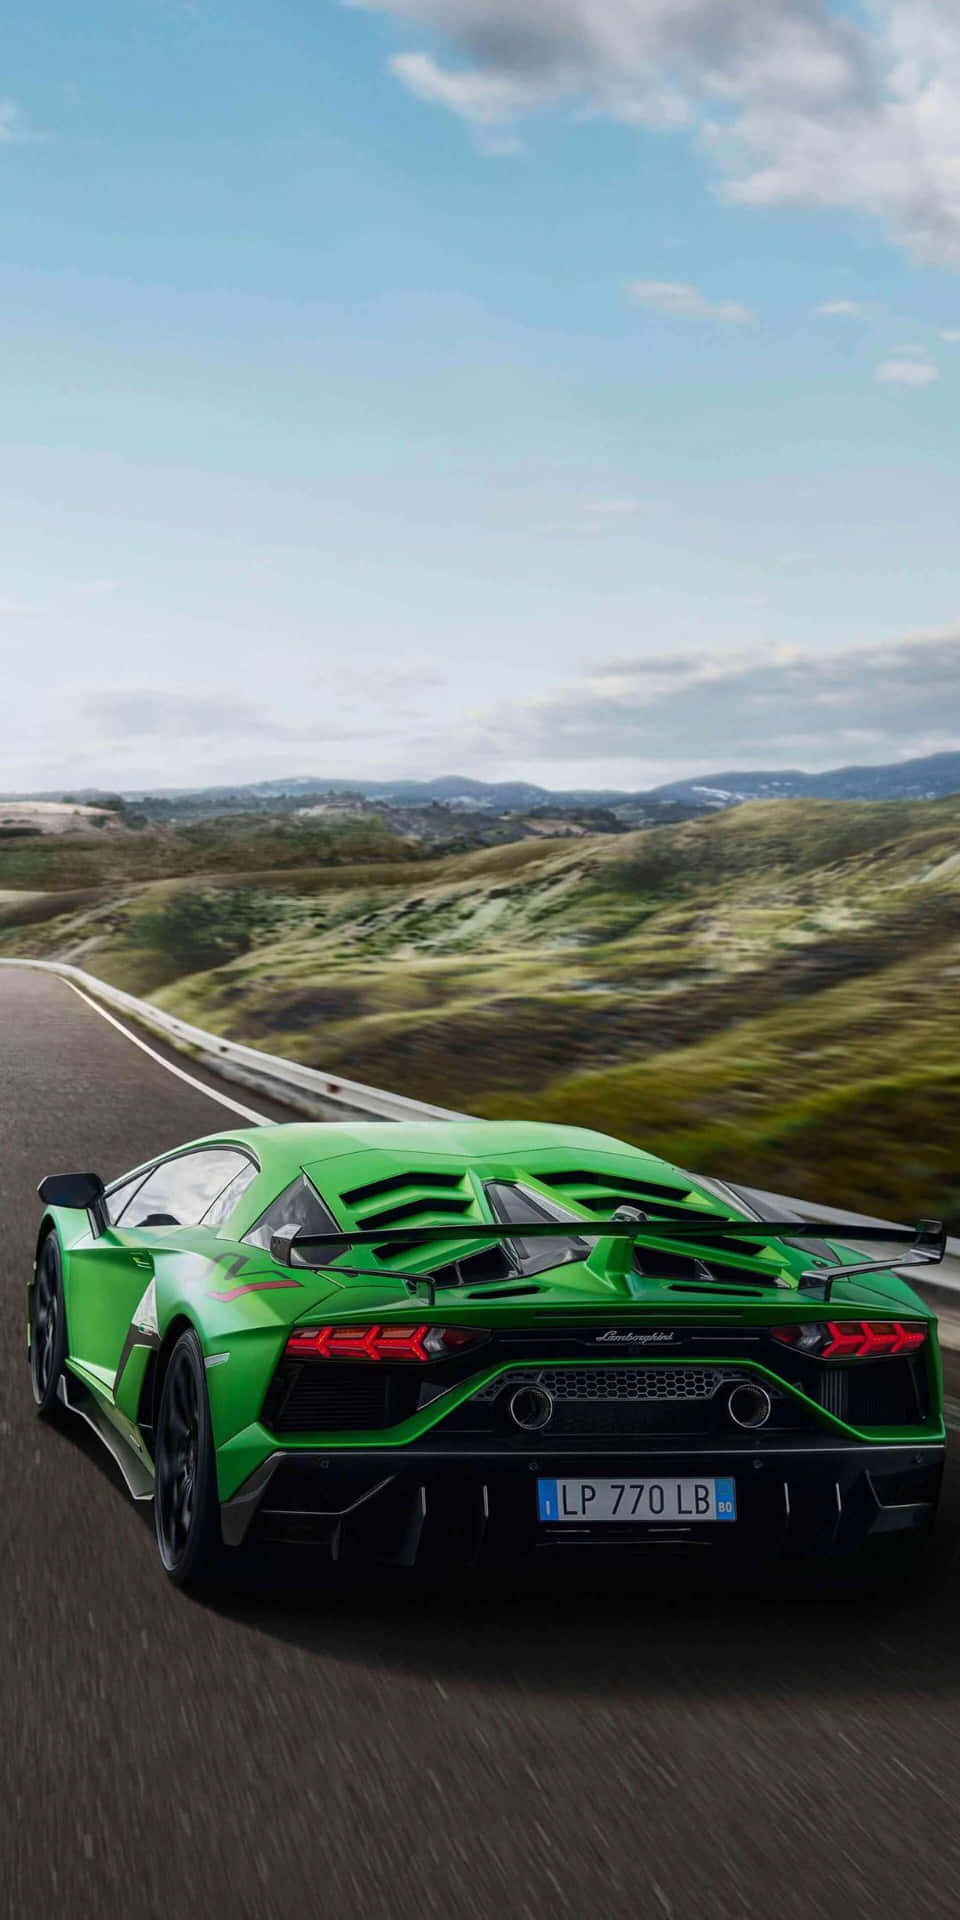 The Green Lamborghini Huracan Is Driving Down The Road